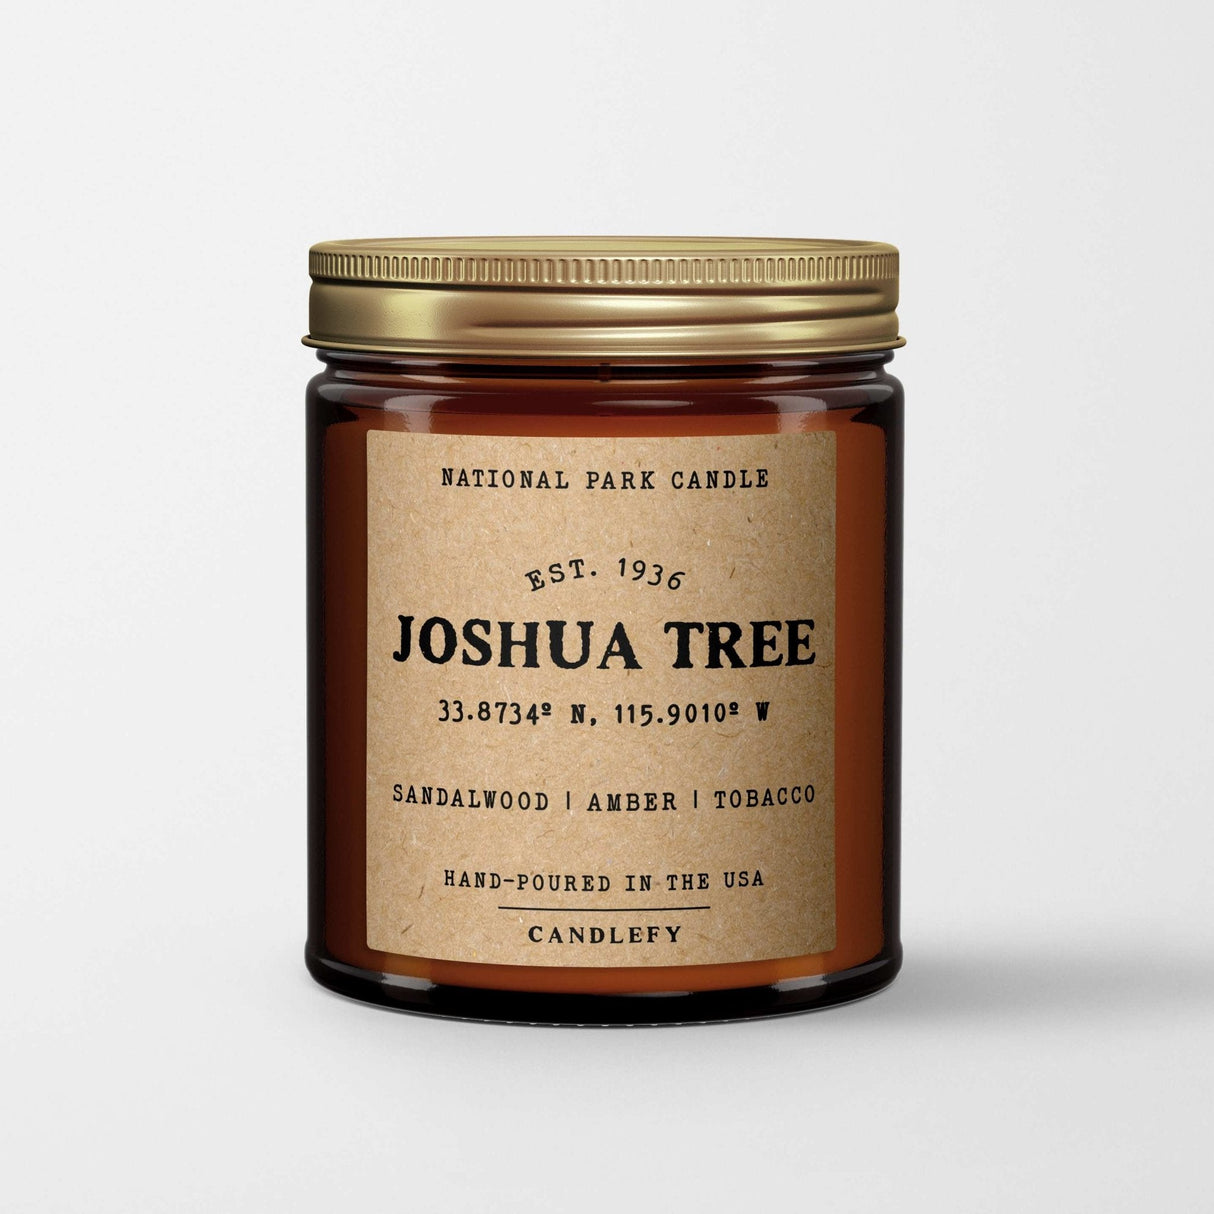 Joshua Tree National Park Candle